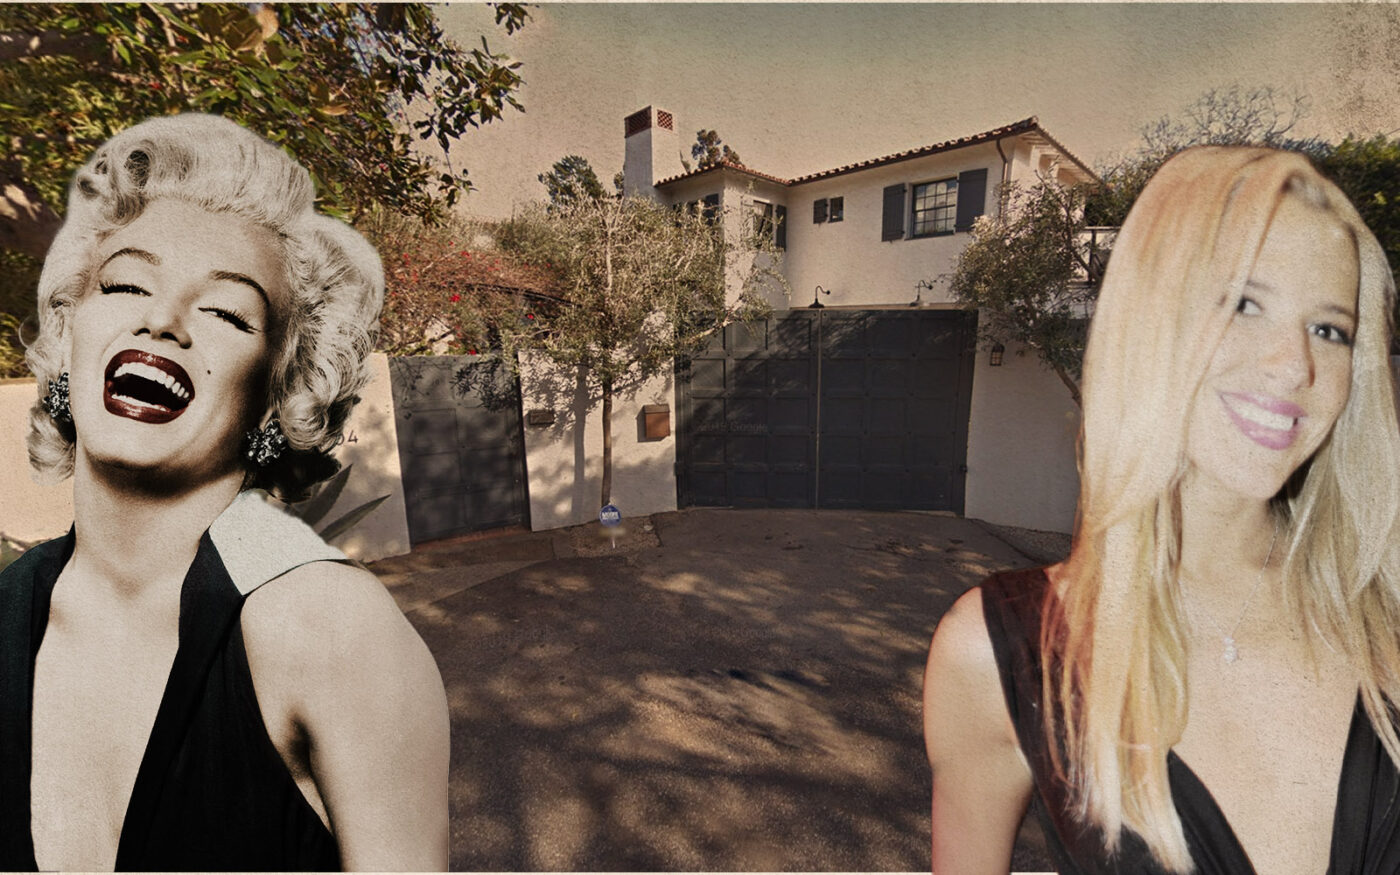 Real Estate Heiress Hatched Plan to Demolish Marilyn Monroe Home